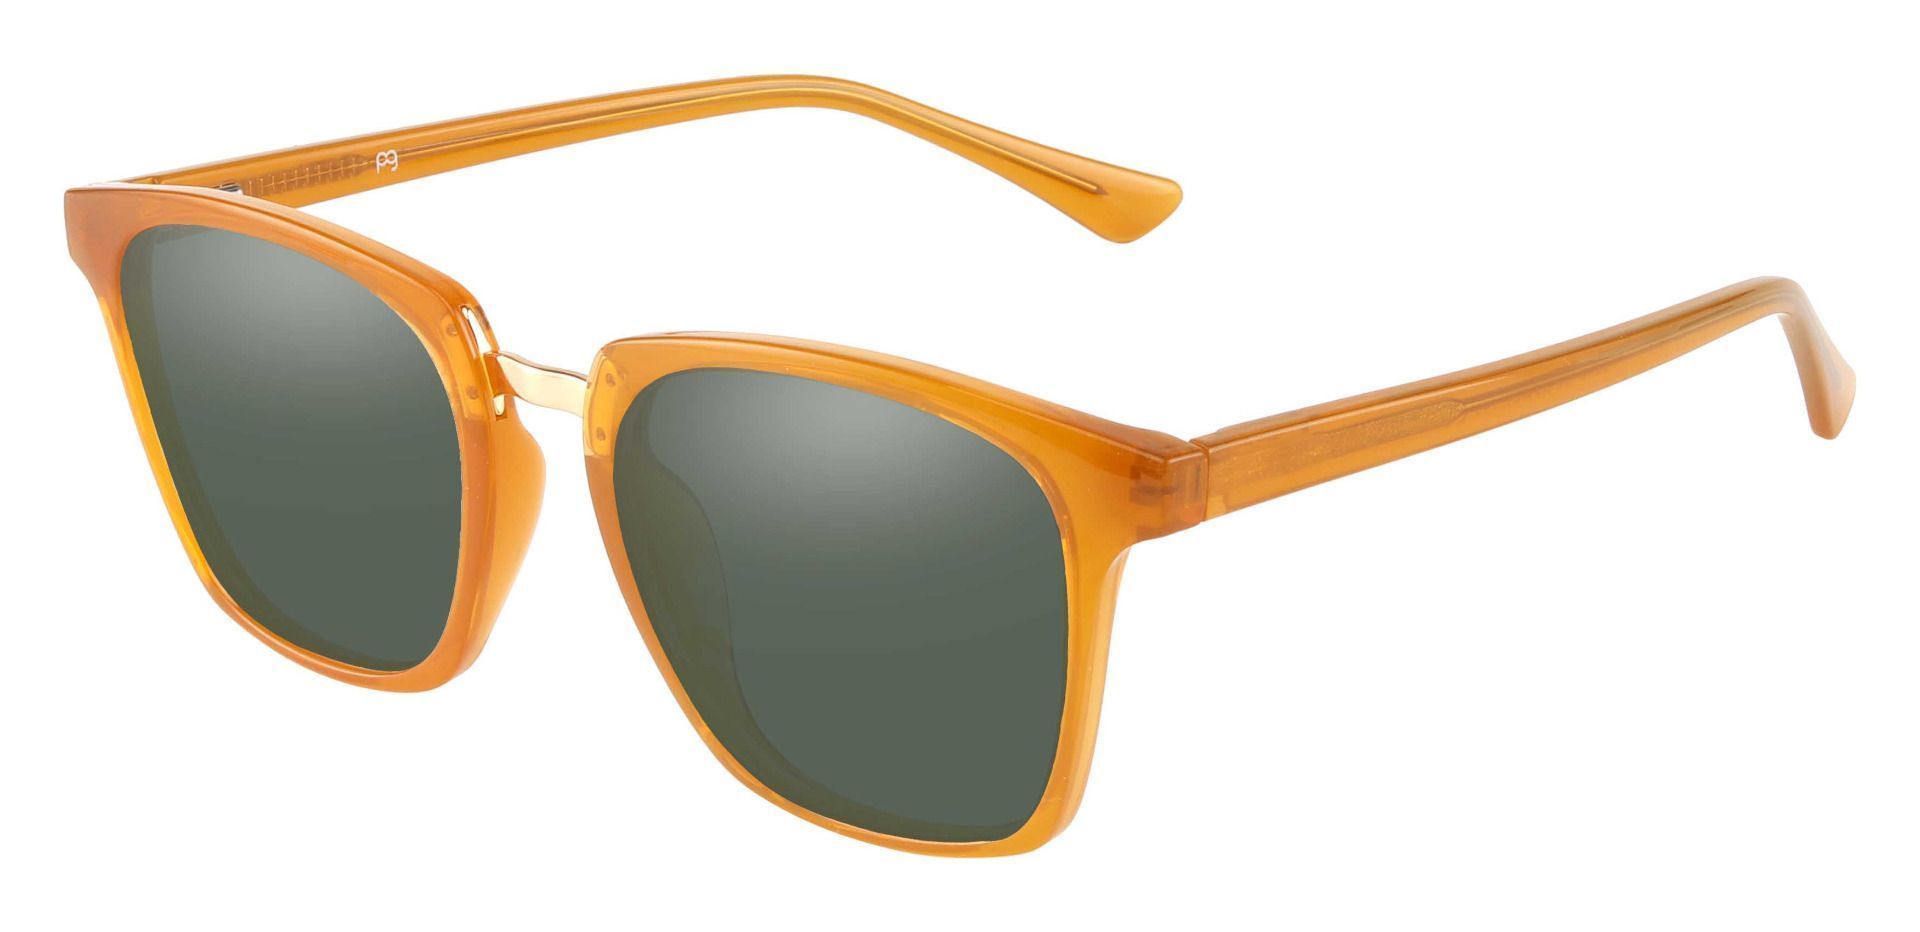 Delta Square Reading Sunglasses - Orange Frame With Green Lenses